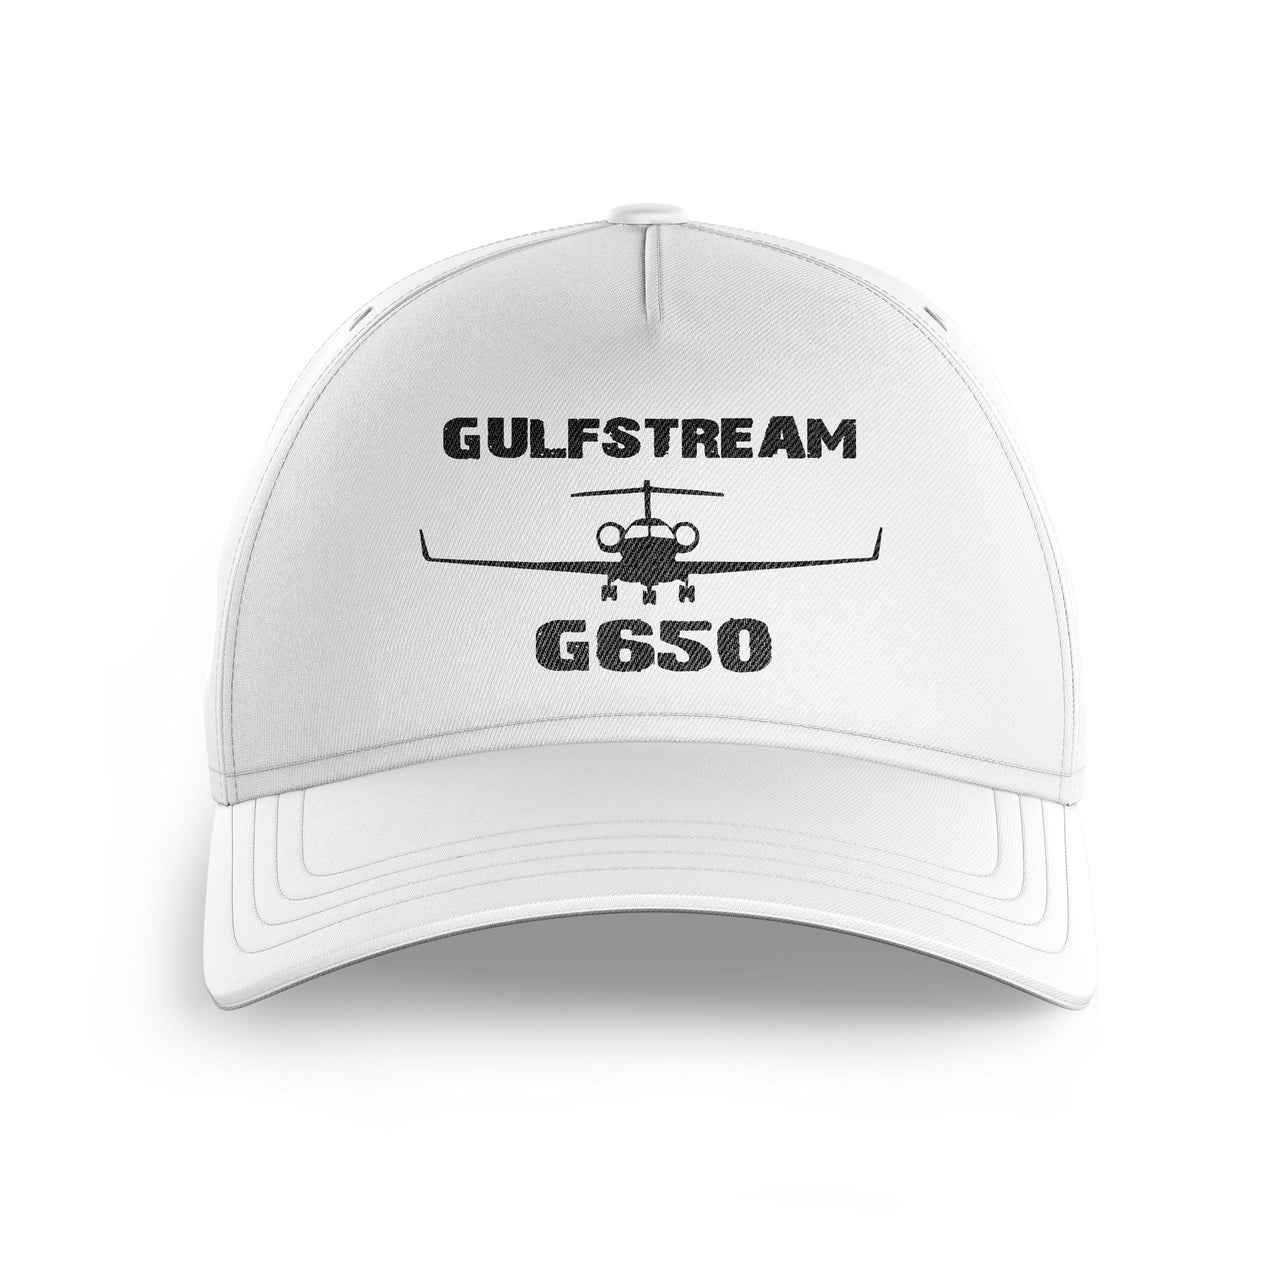 Gulfstream G650 & Plane Printed Hats